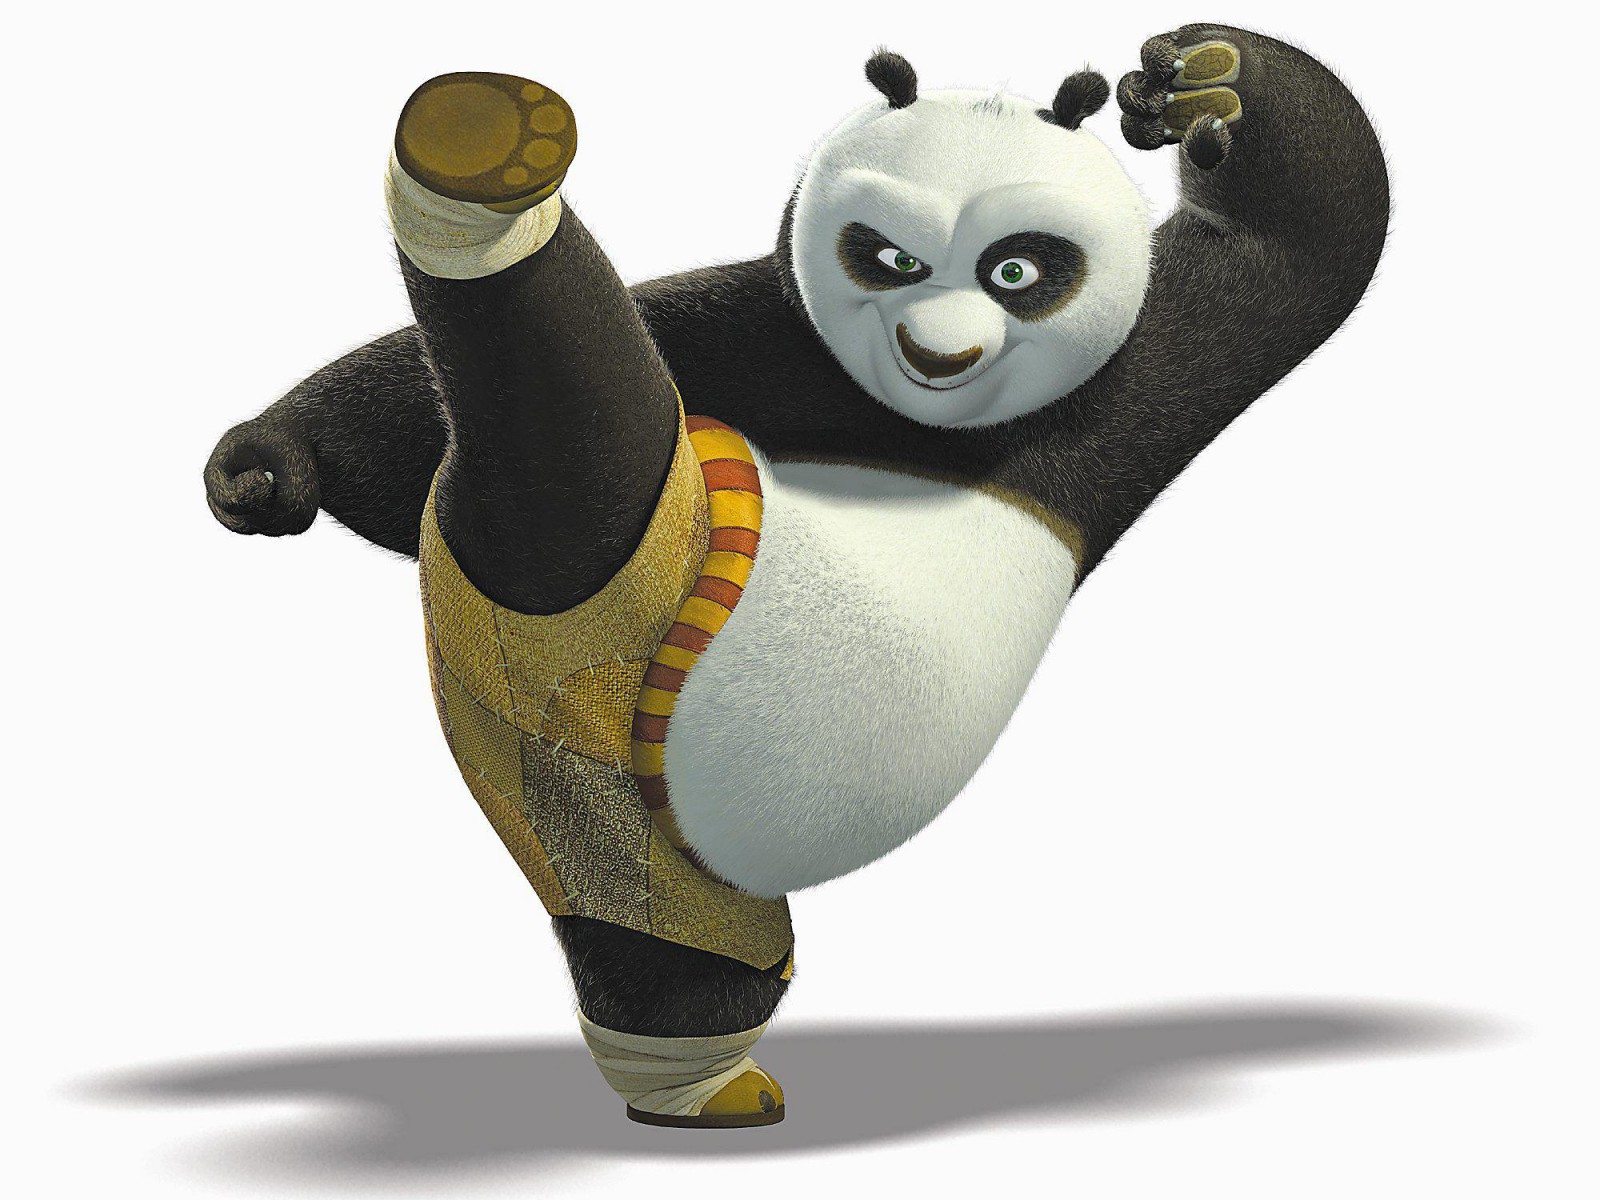 Kung Fu Panda Backgrounds, Compatible - PC, Mobile, Gadgets| 1600x1200 px